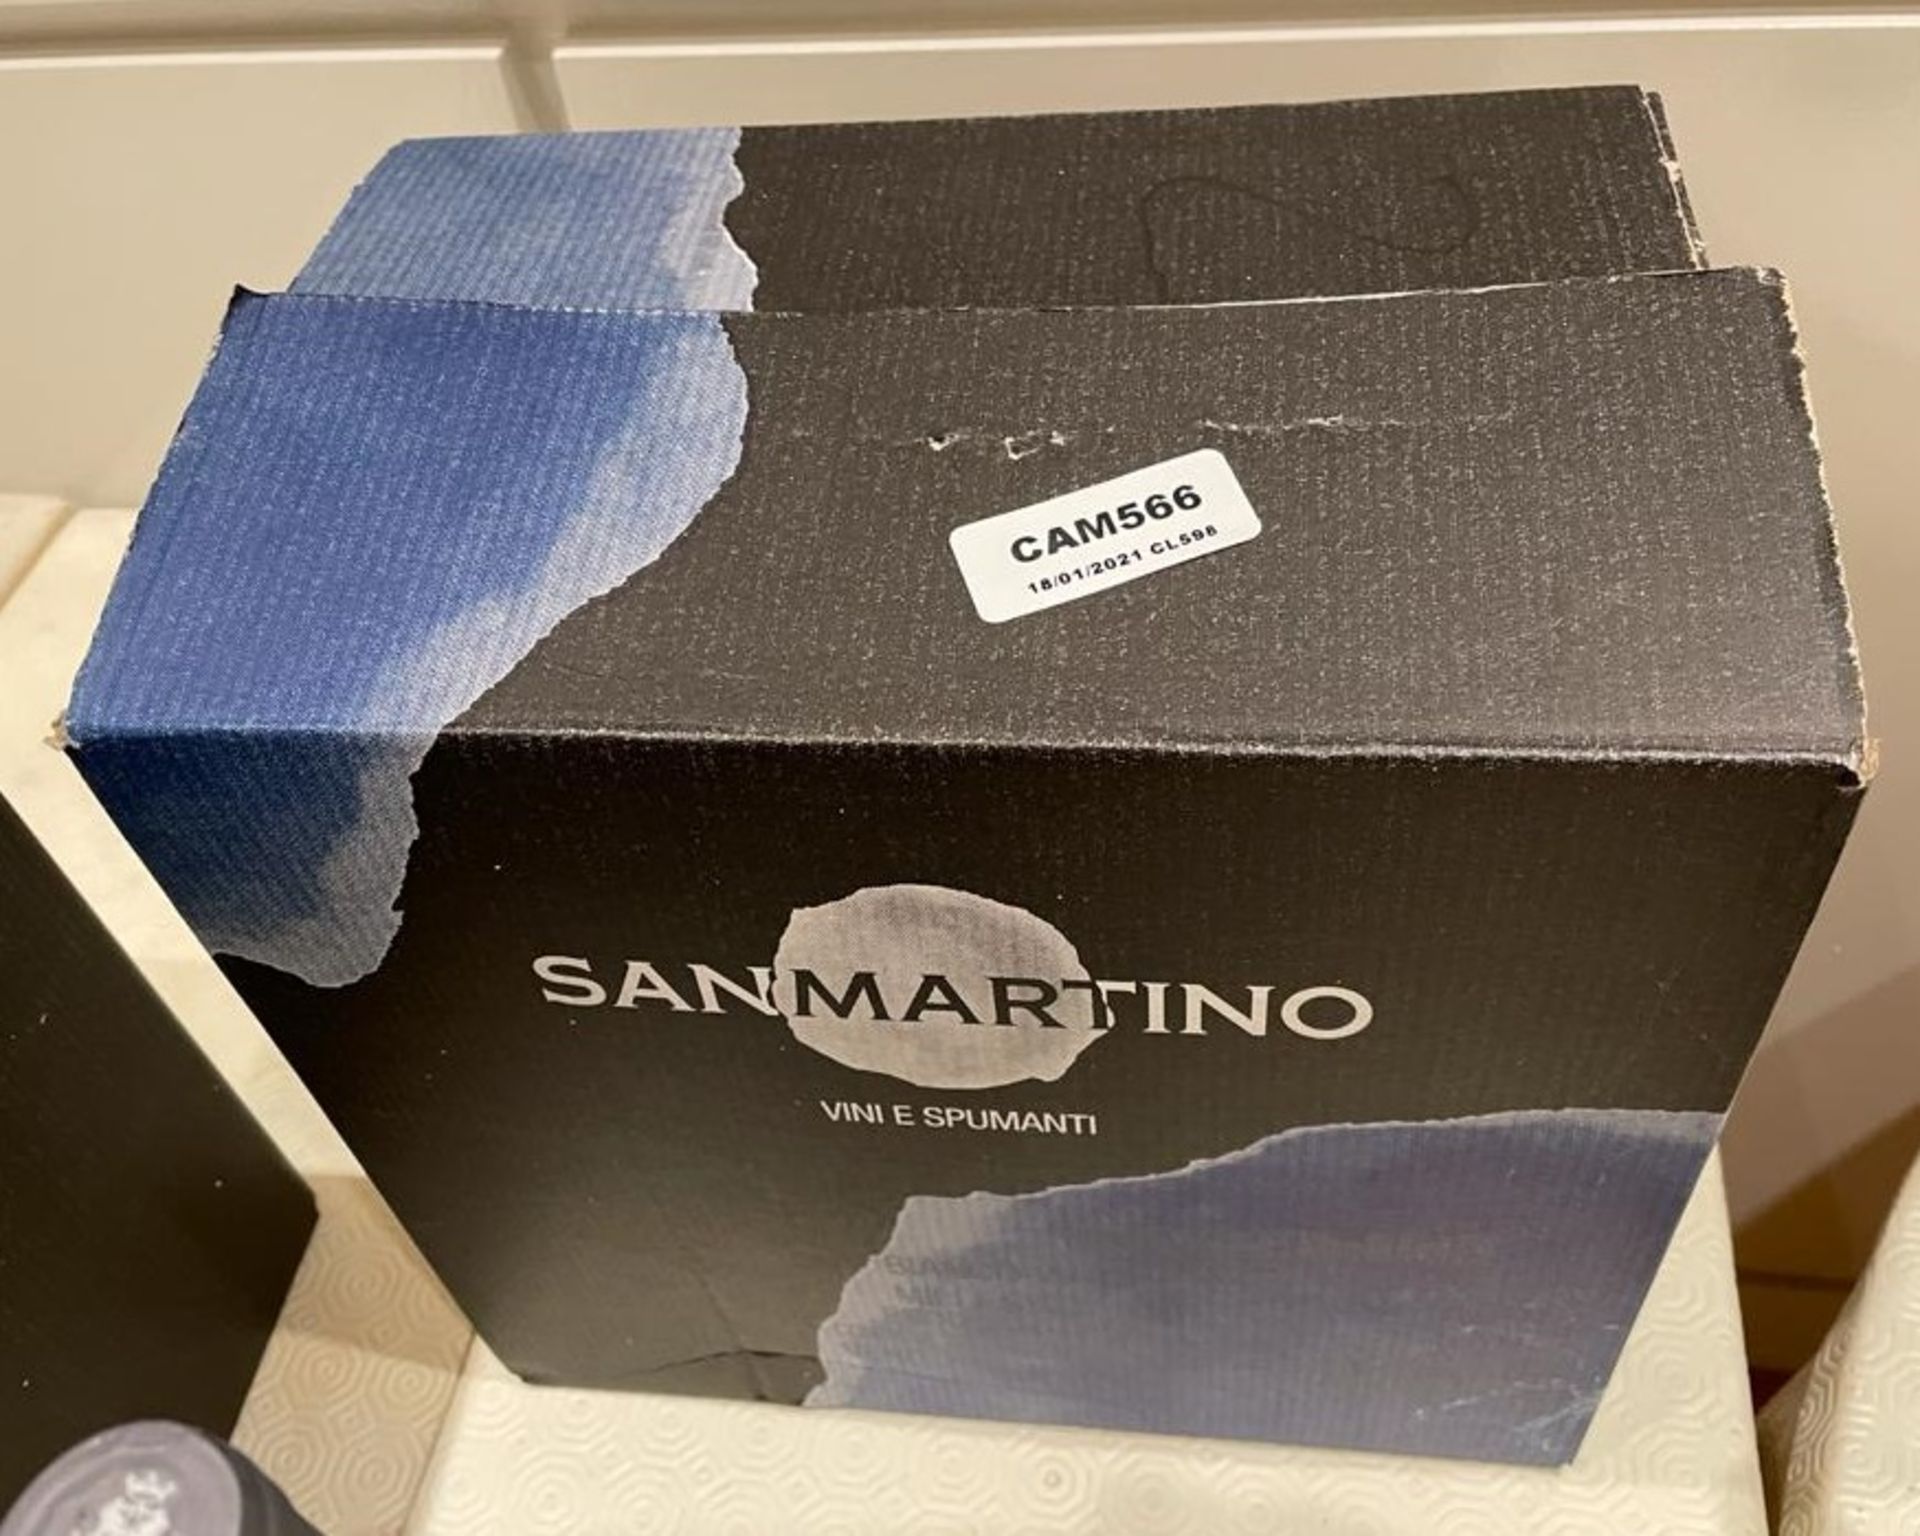 1 x Box Containing 6 x Bottles Of SAN MARTINO UNDICI MILLESIMATO SPARKLING - 2018 - 75cl - Image 5 of 5